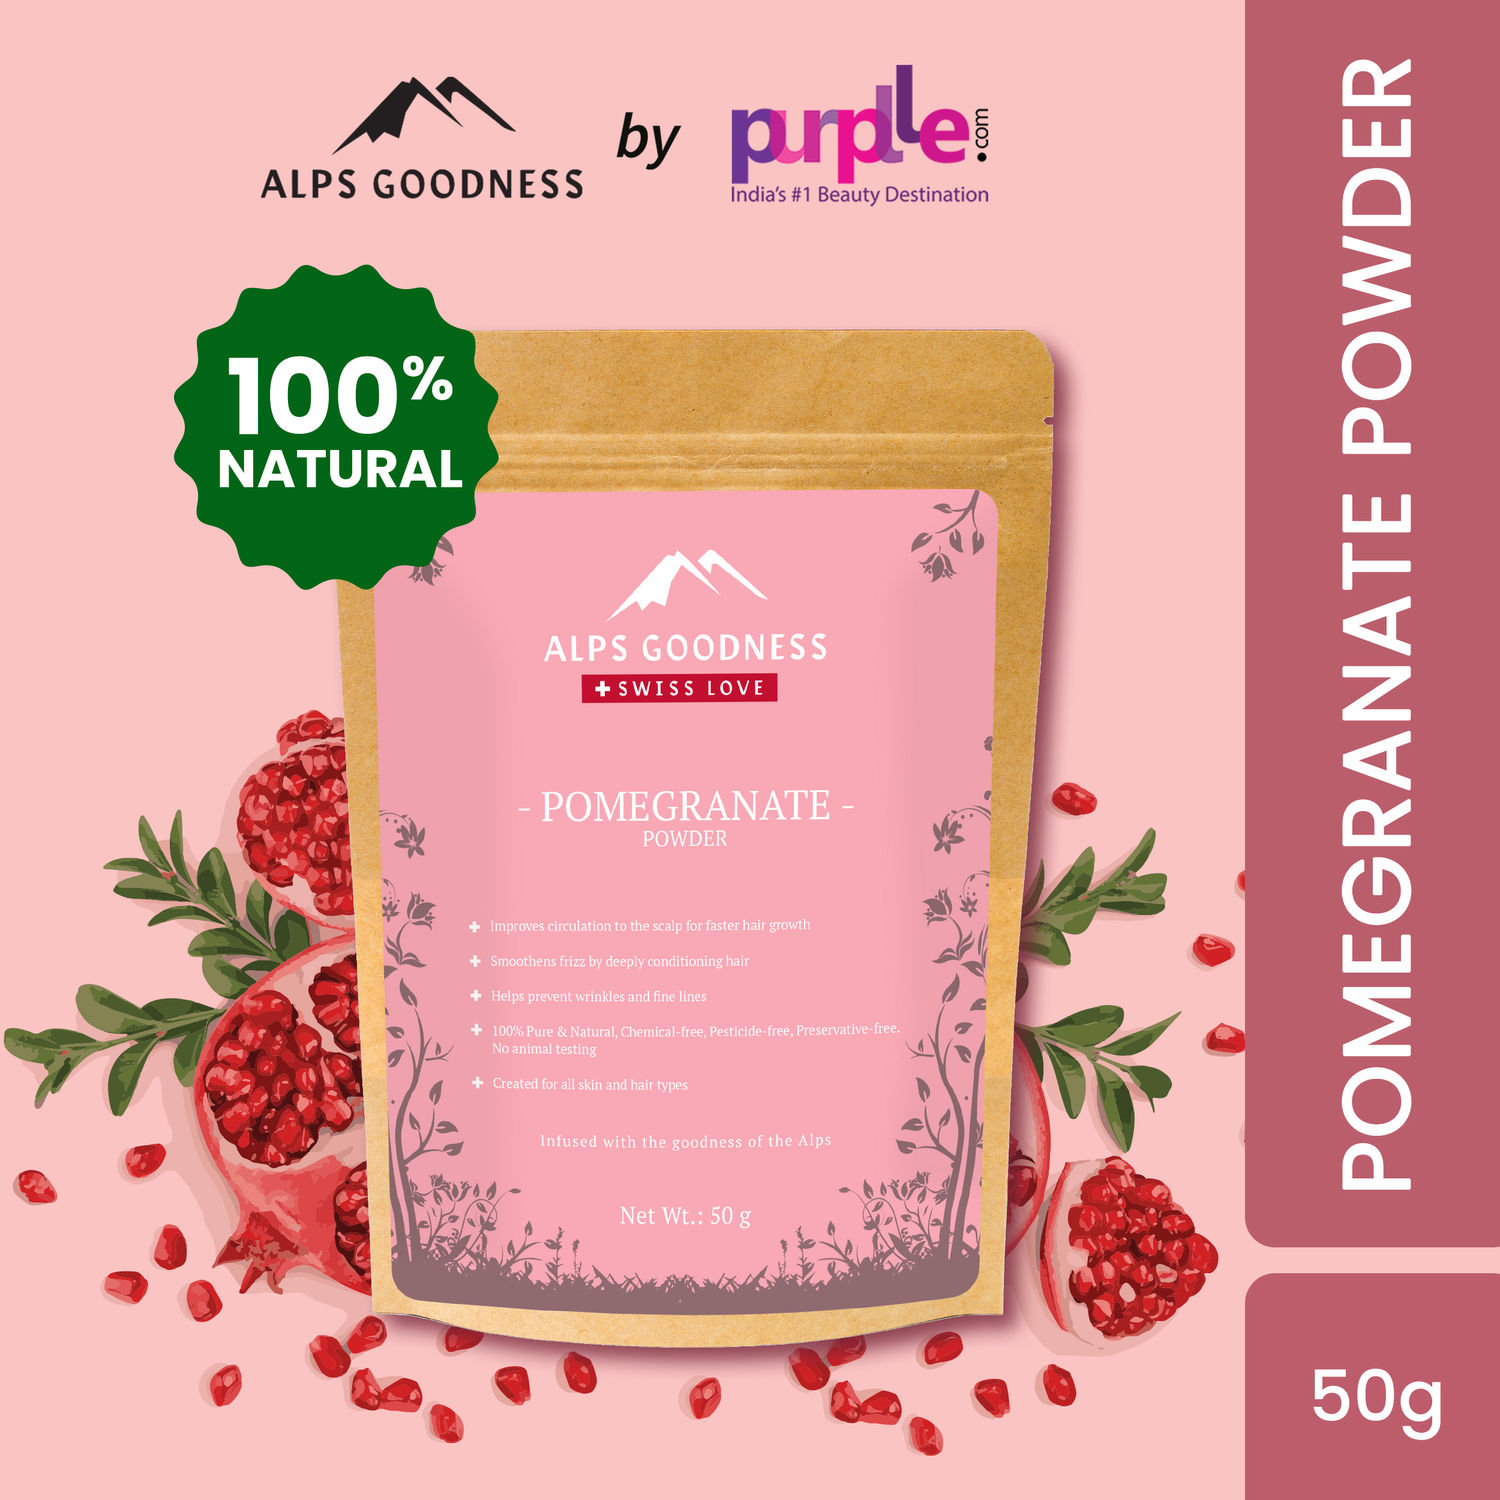 Alps Goodness Powder - Pomegranate (50 gm)